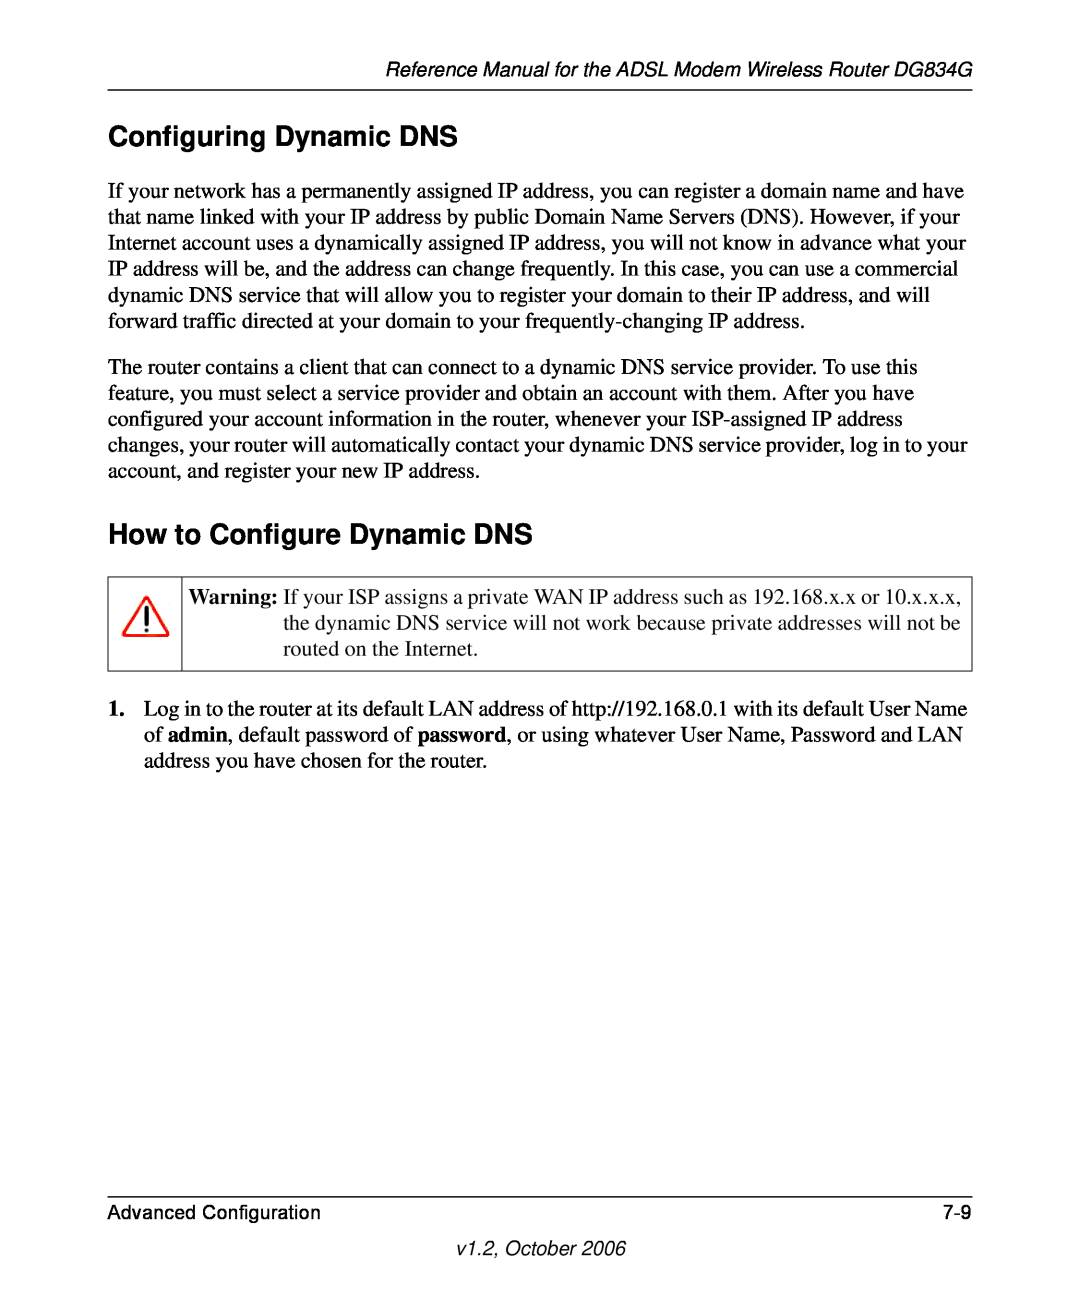 NETGEAR DG834G manual Configuring Dynamic DNS, How to Configure Dynamic DNS, Advanced Configuration 